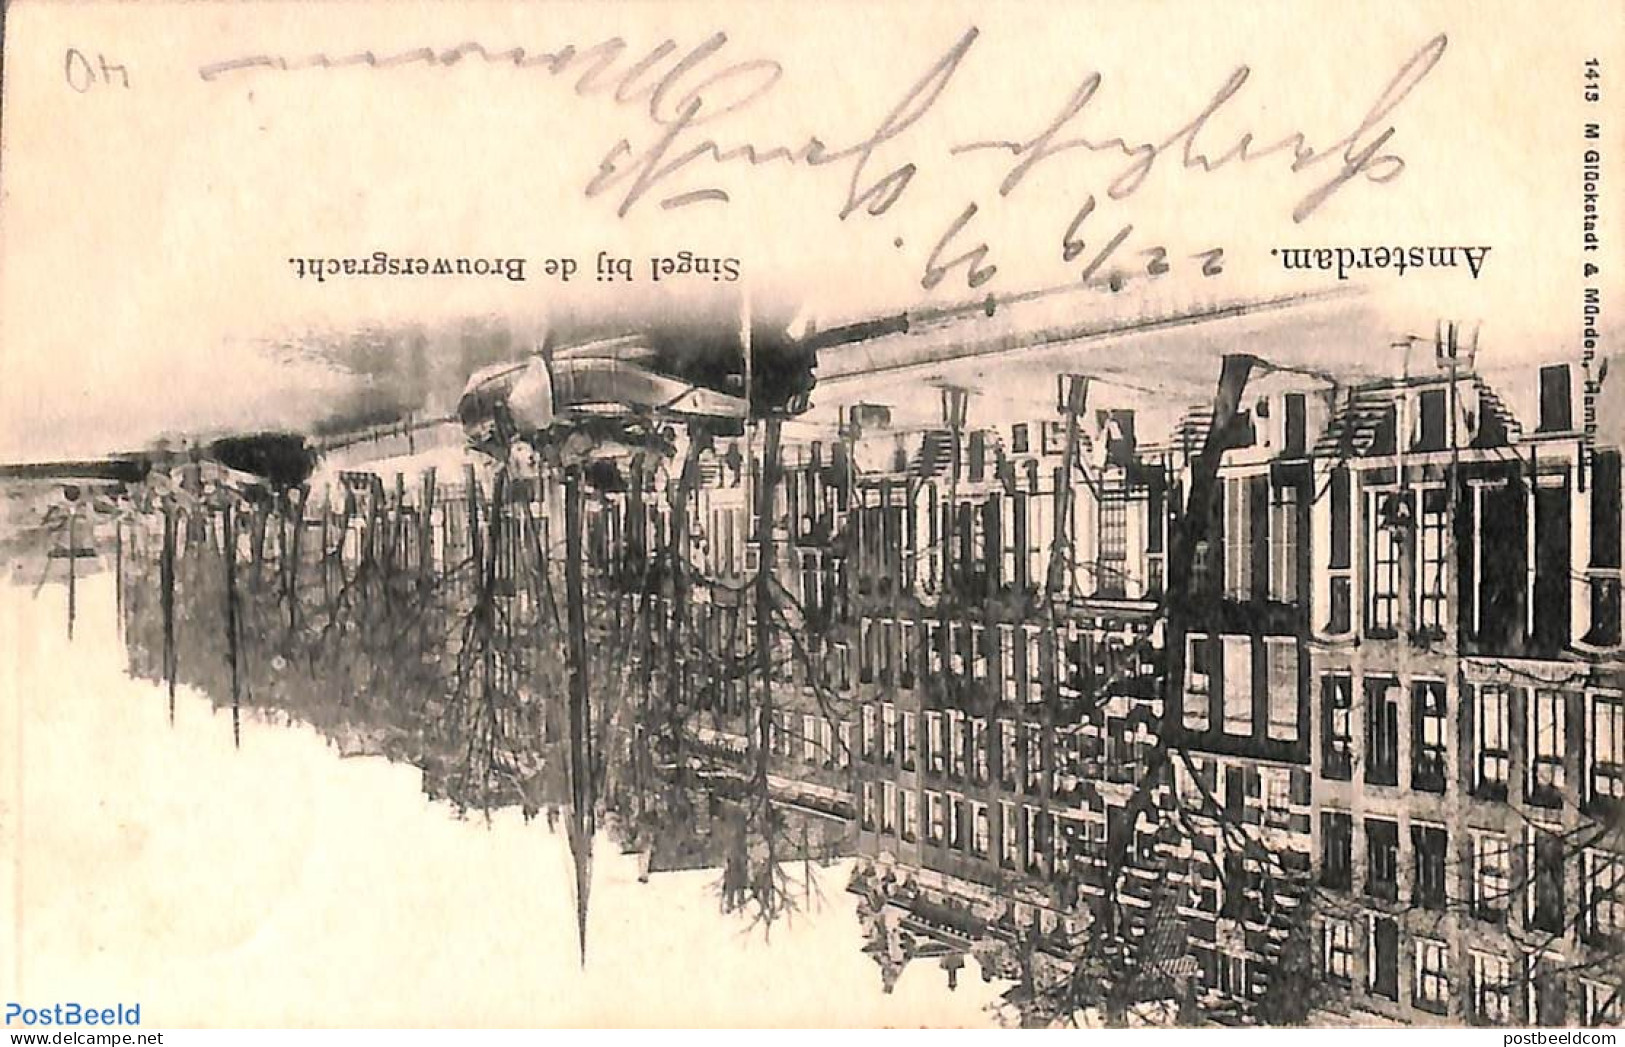 Netherlands 1899 Postcard From Amsterdam To Hannover, Postal History - Brieven En Documenten